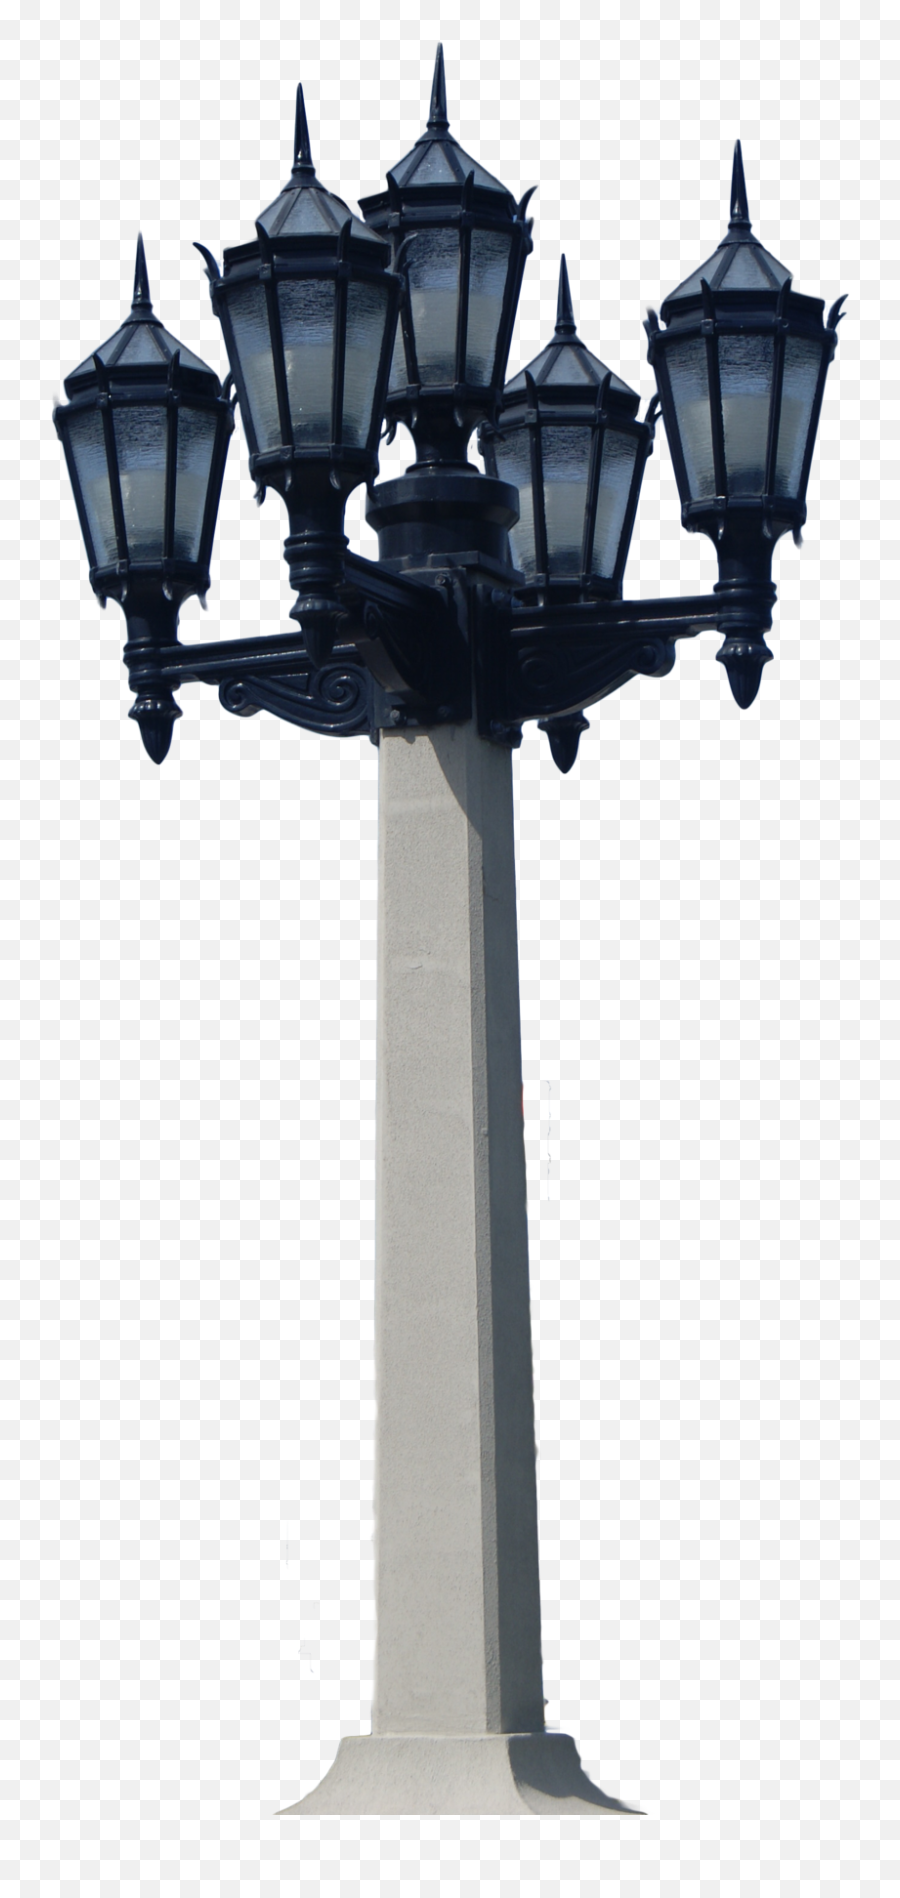 Lamp Post Png Image - Street Light,Light Post Png